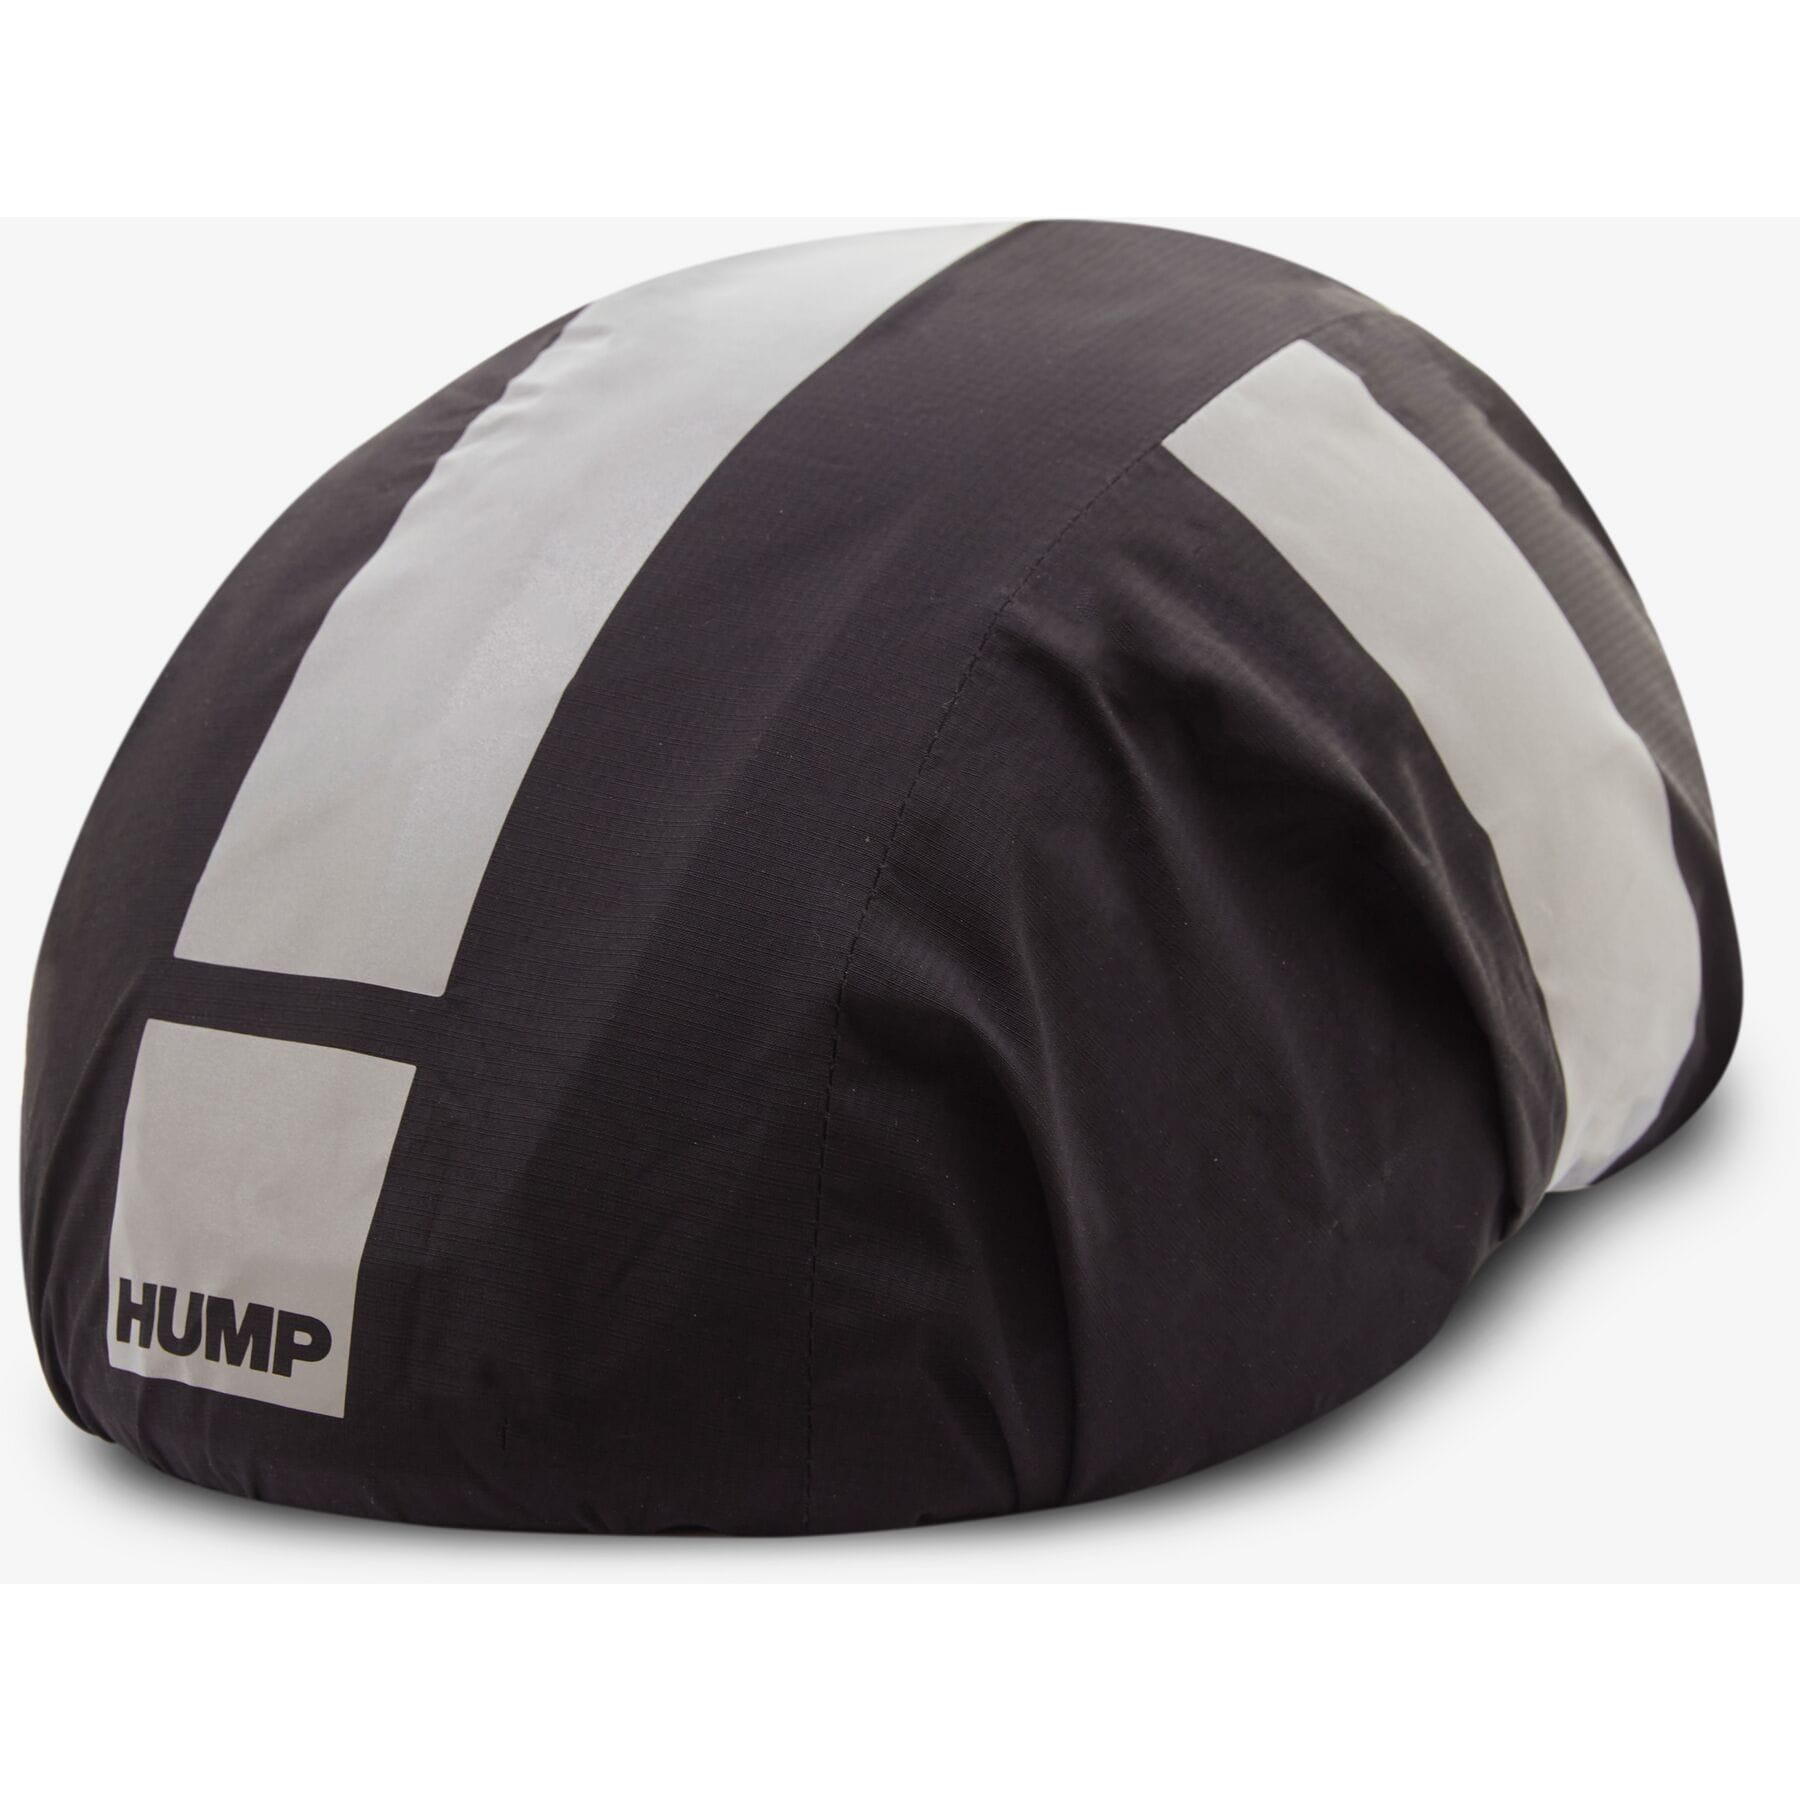 HUMP Reflective Waterproof Helmet Cover - Black 1/2